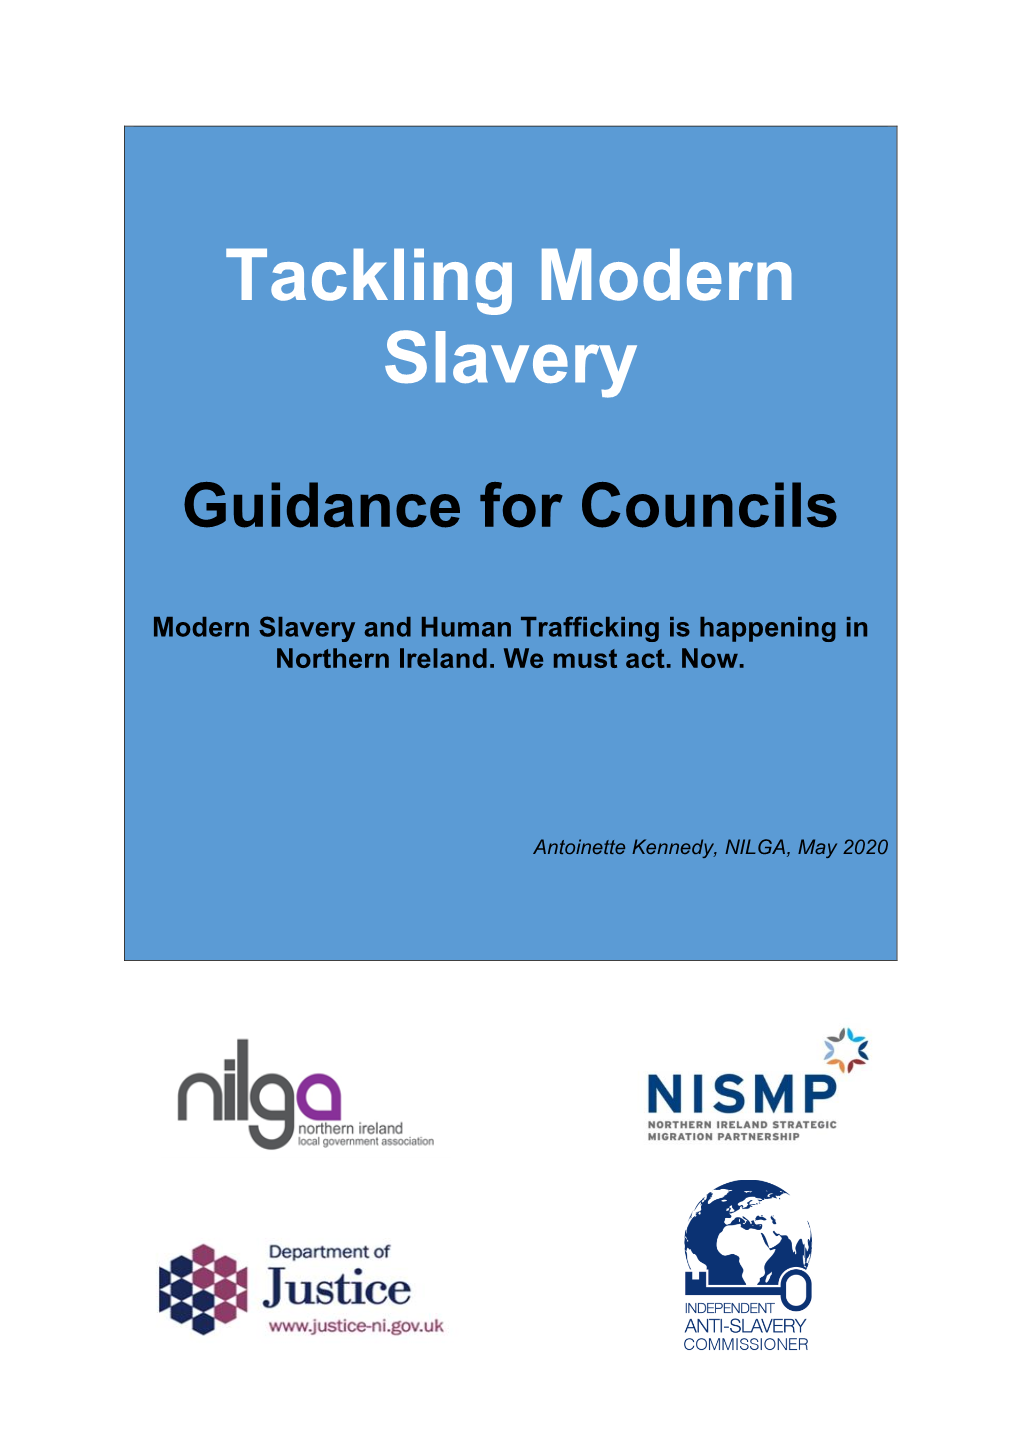 NILGA: Tackling Modern Slavery Guidance for Councils